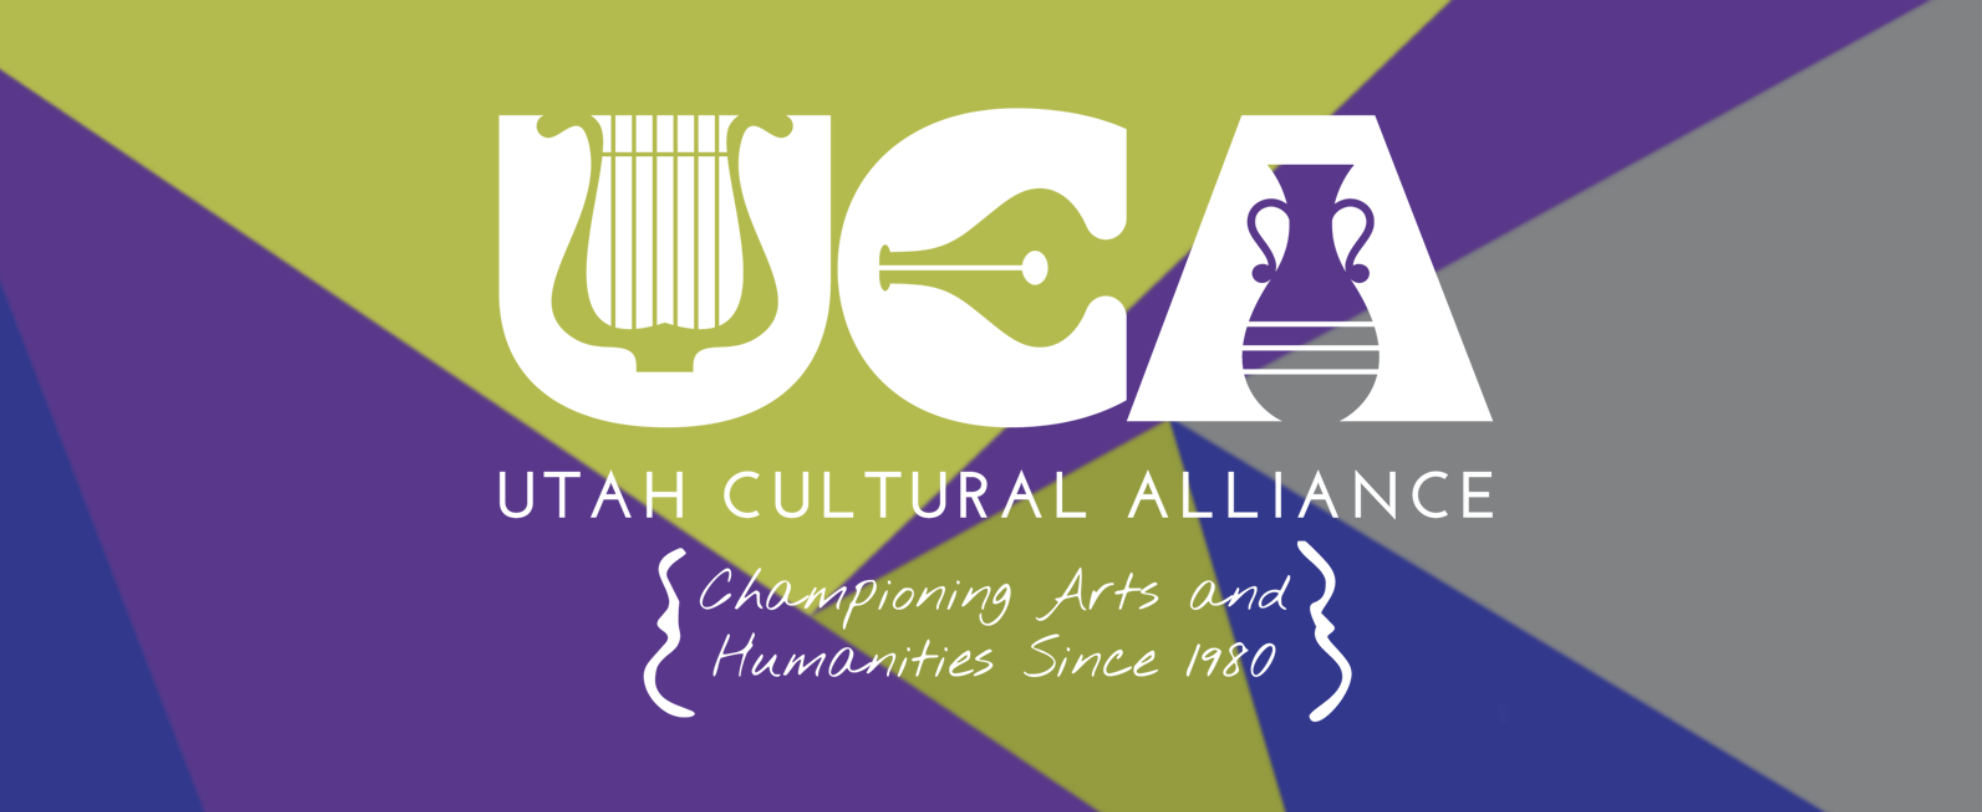 Utah Cultural Alliance